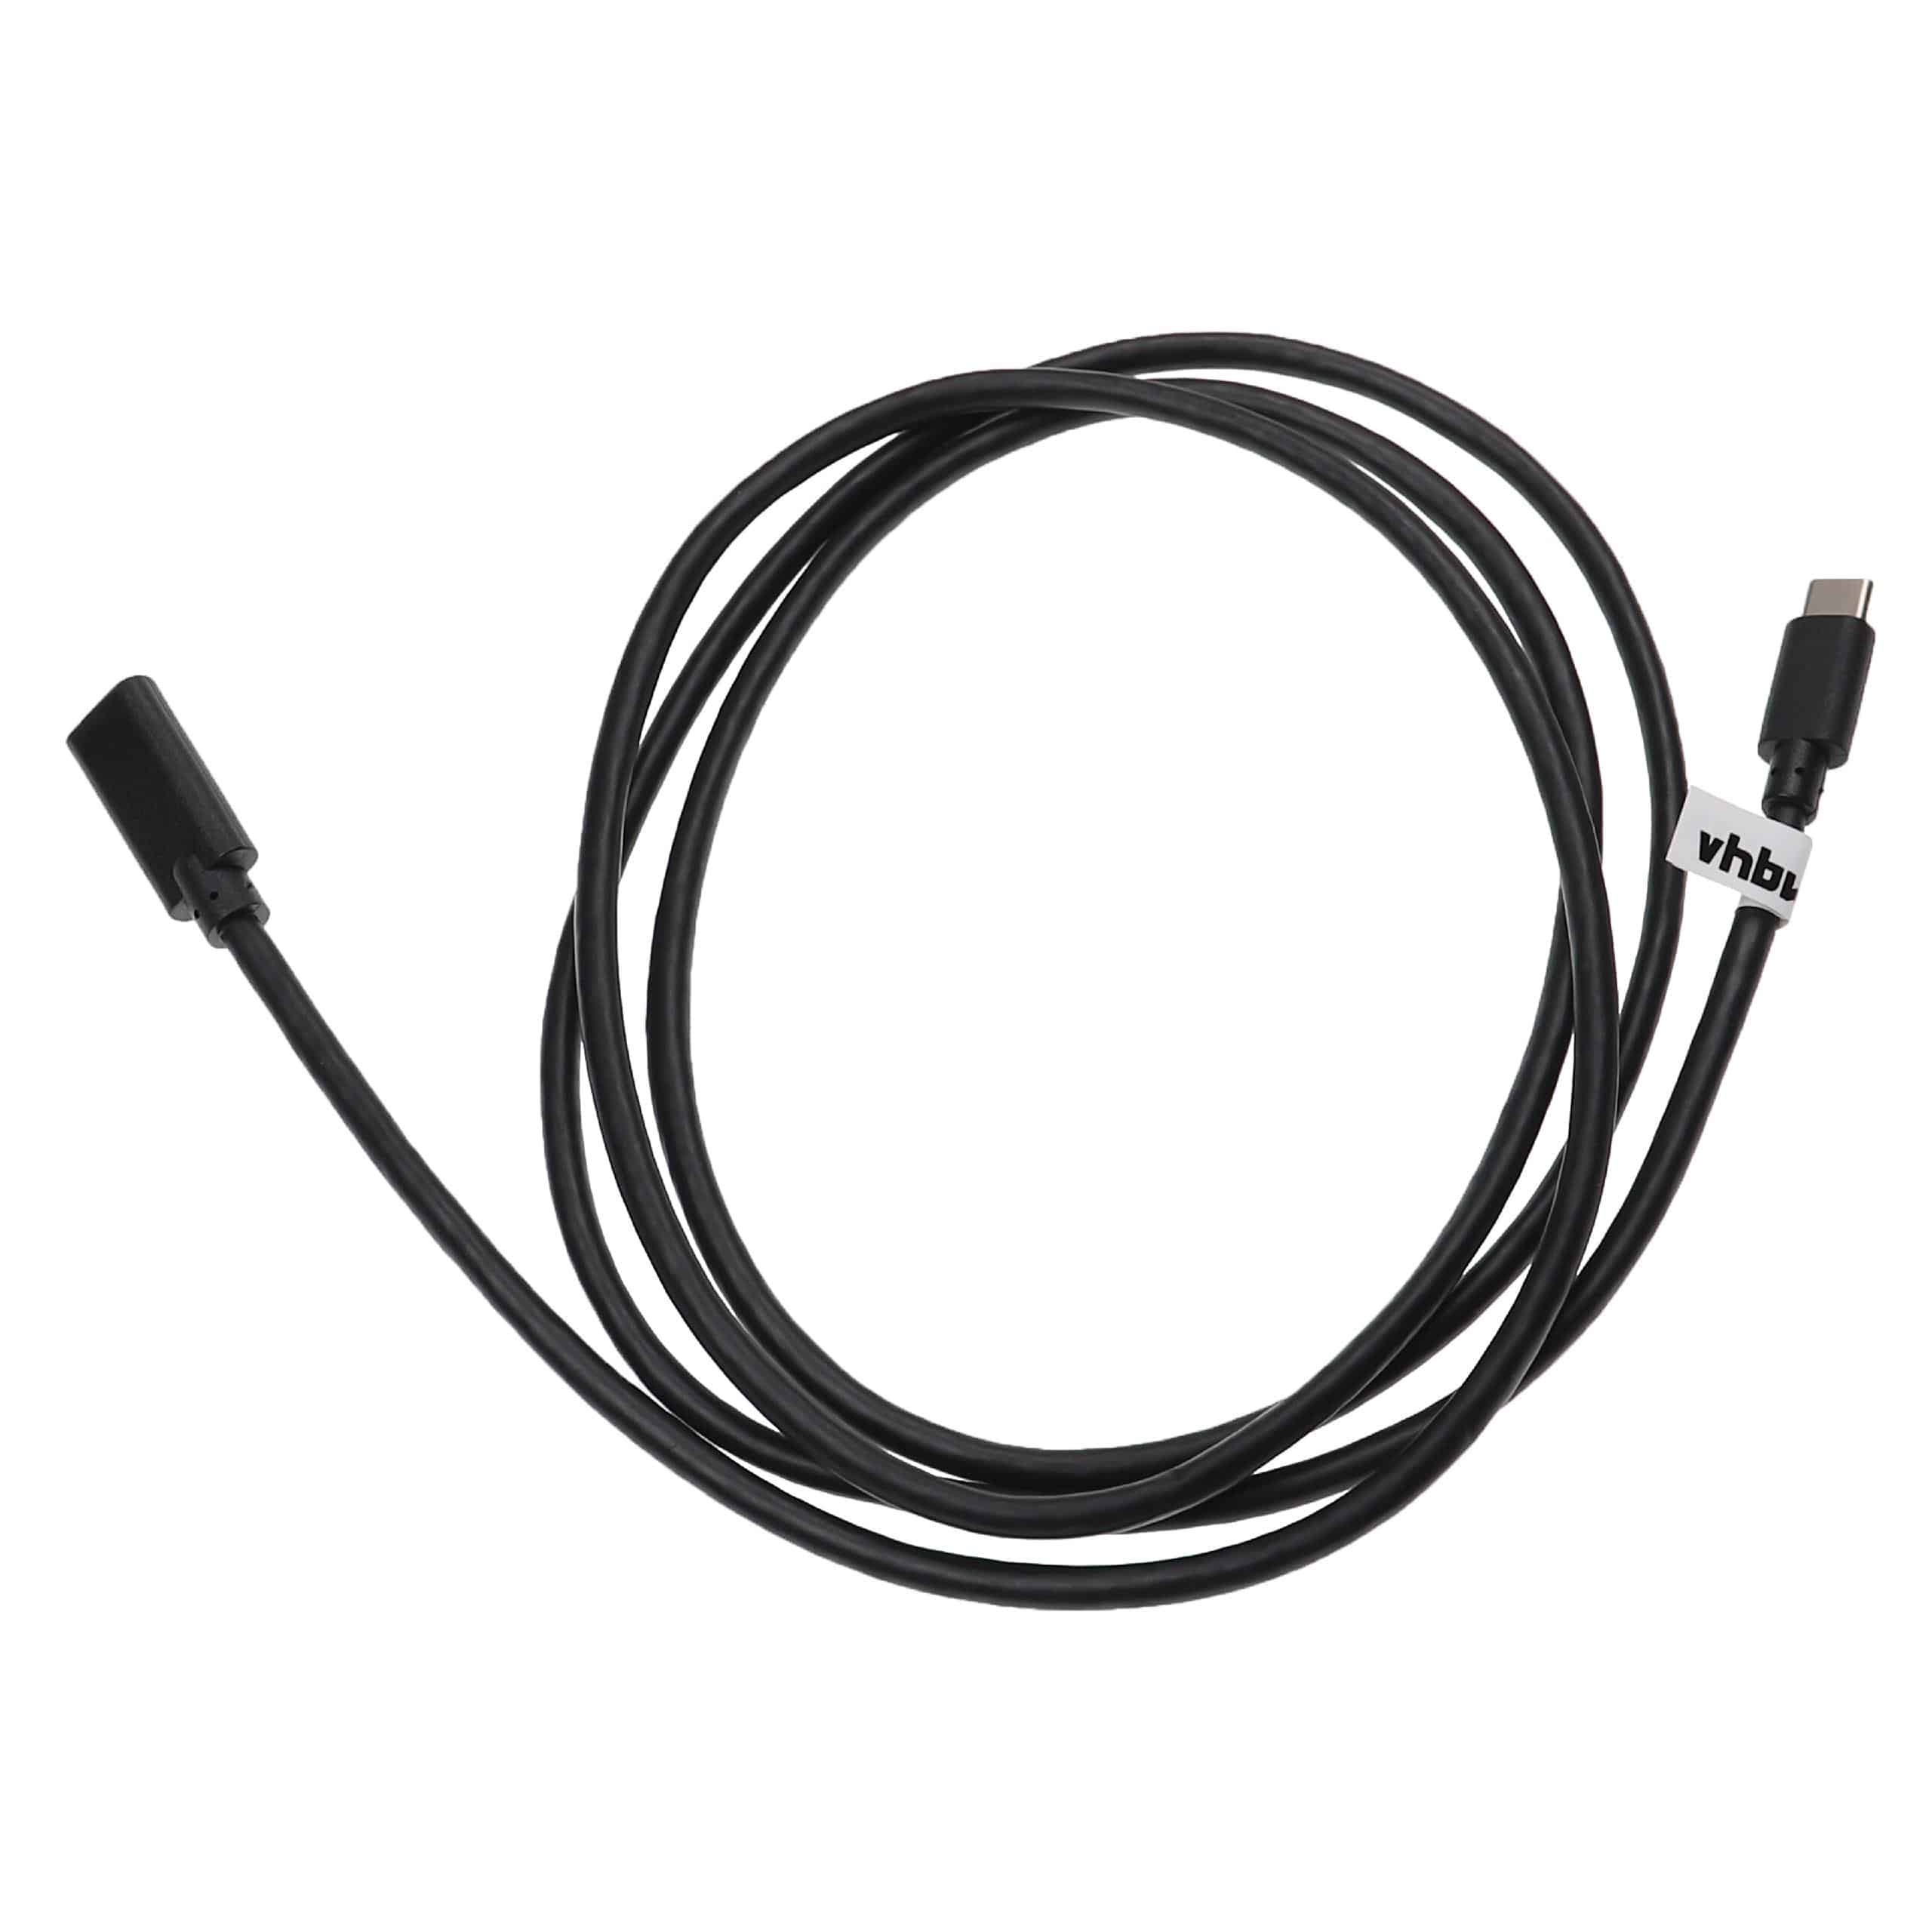 Cavo USB-C di prolunga per diversi tablet, notebook, PCs - Cavo USB 3.1 C da 1,5 m nero